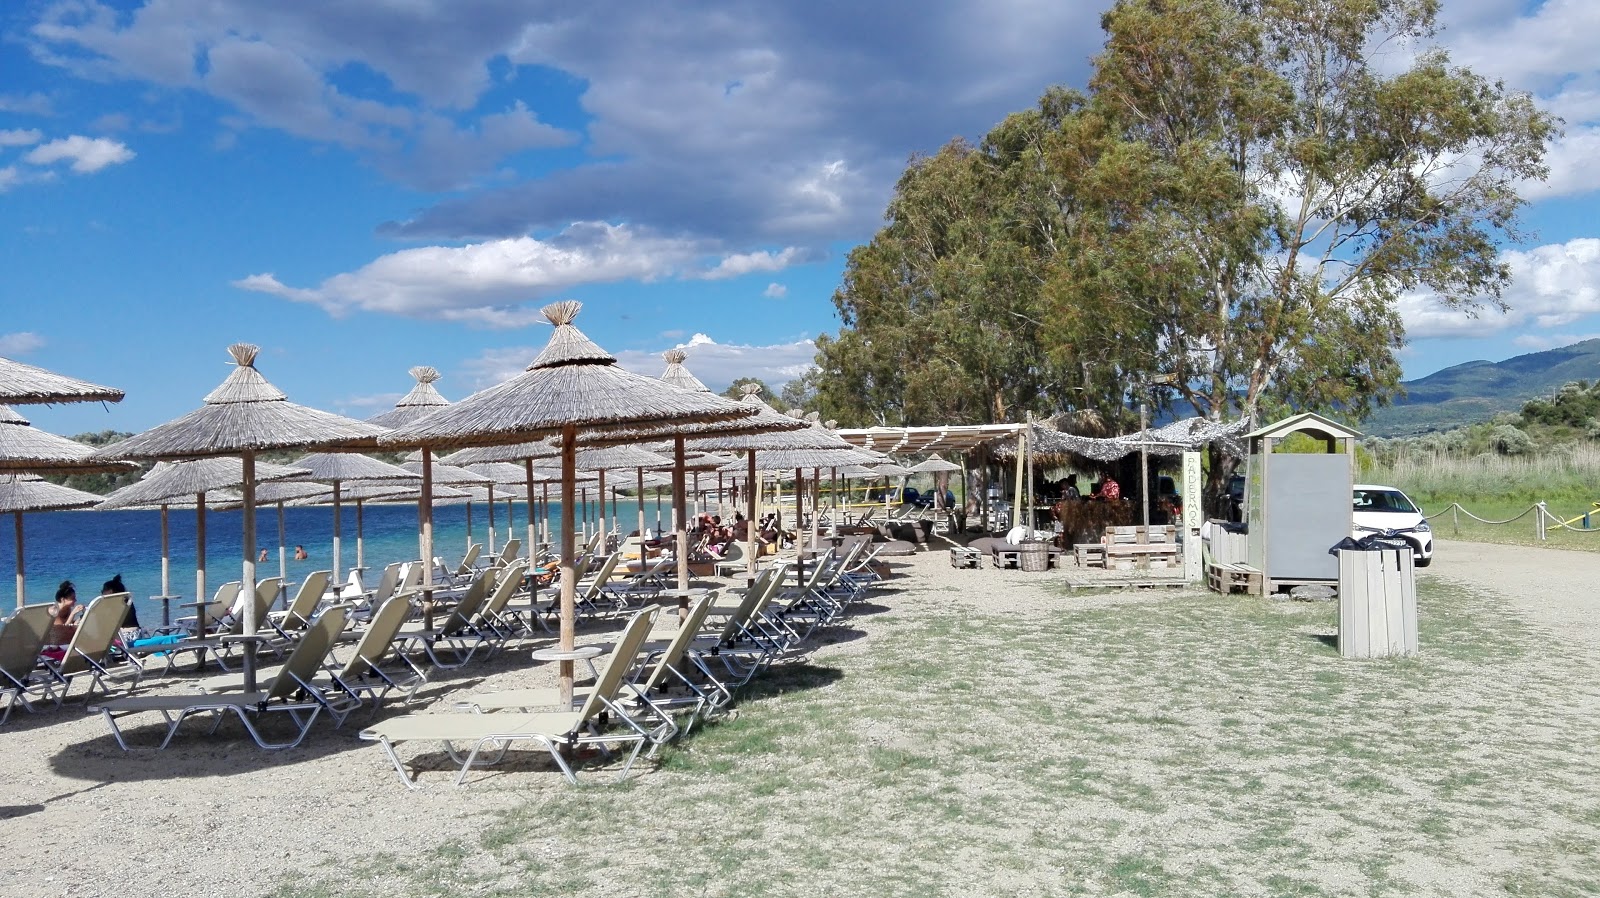 Fotografija Pantermos beach nahaja se v naravnem okolju